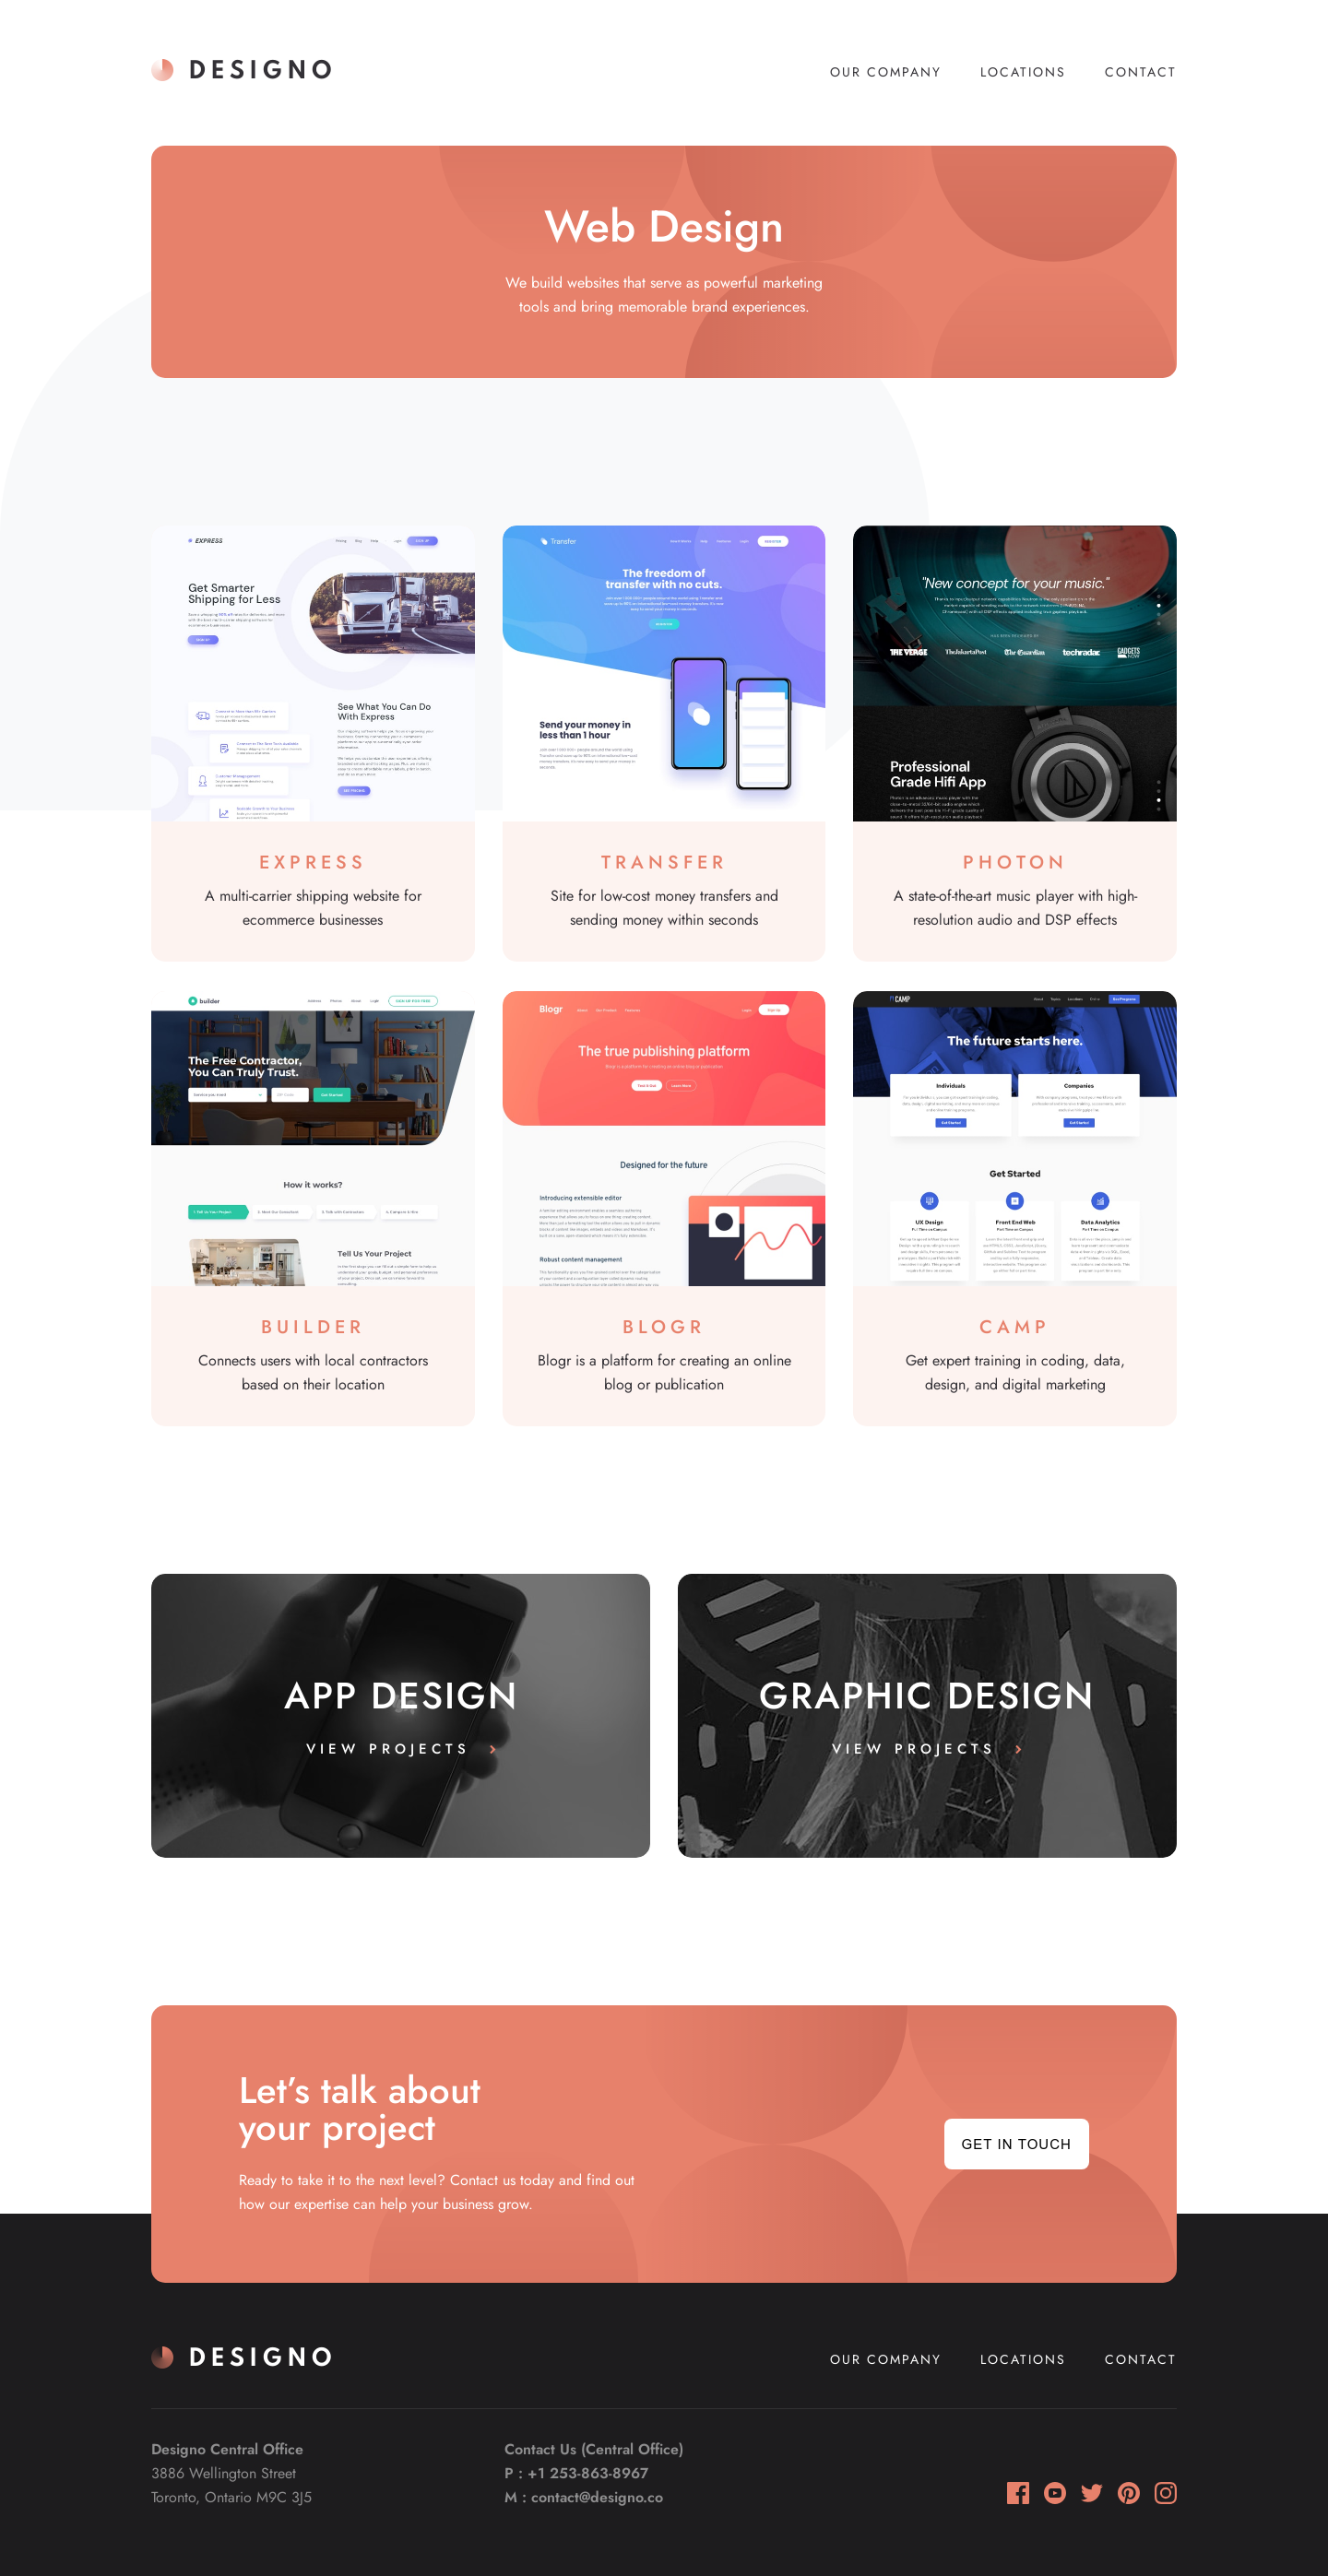 Desktop – Web Design page